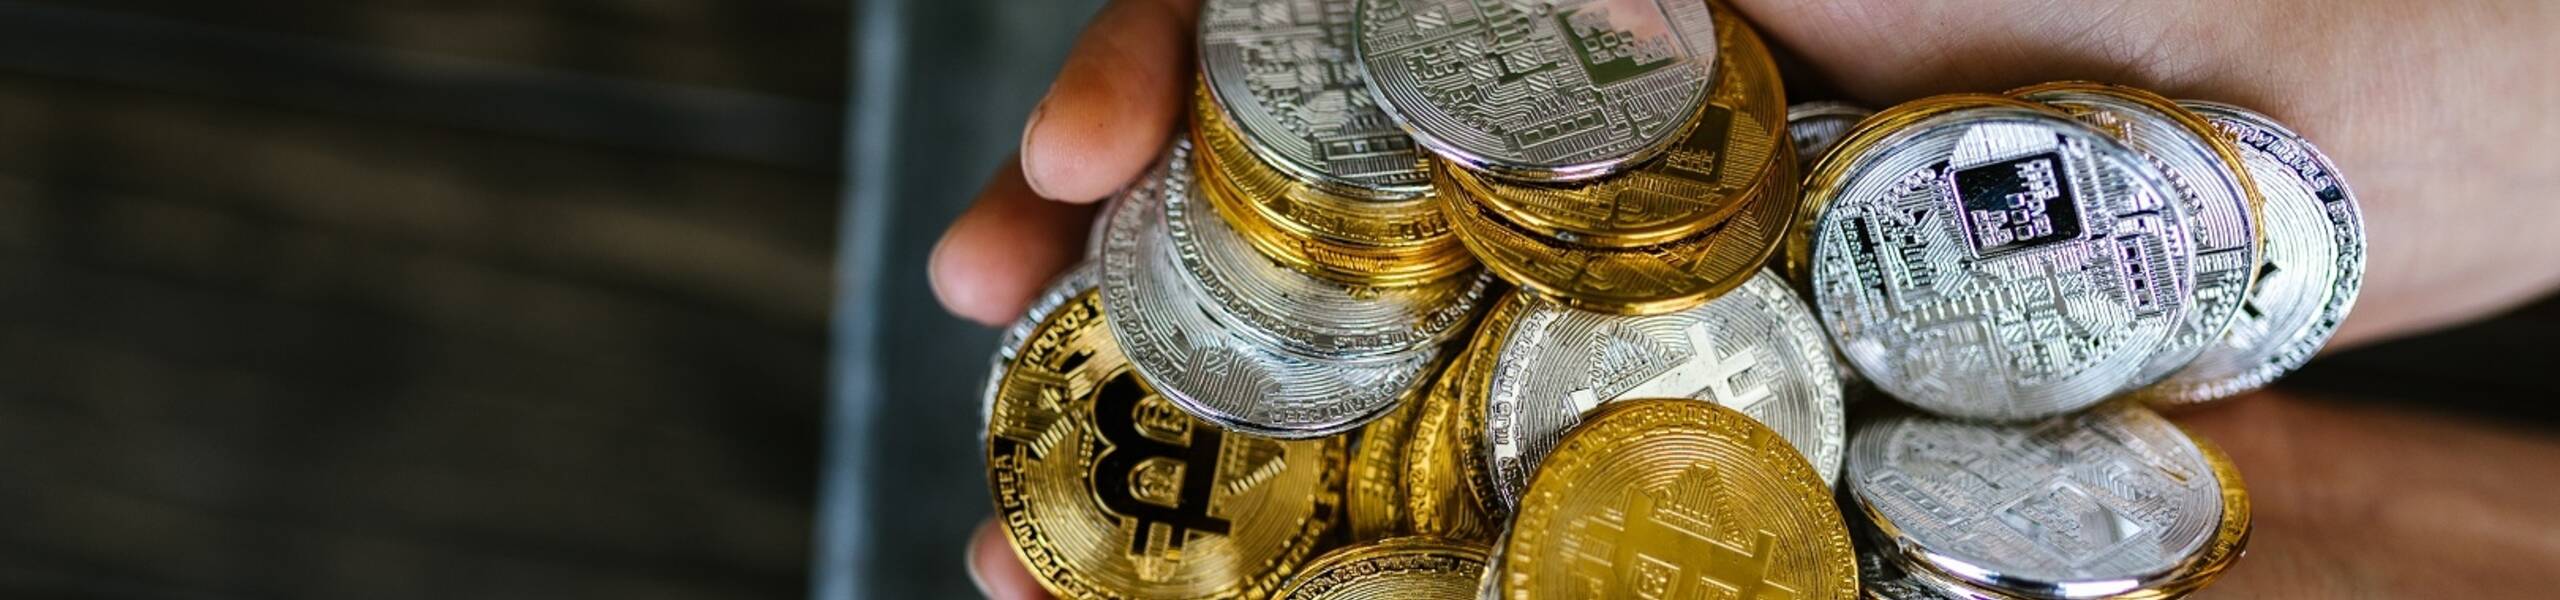 Is The Chinese Crypto Narrative Bullish for Bitcoin?